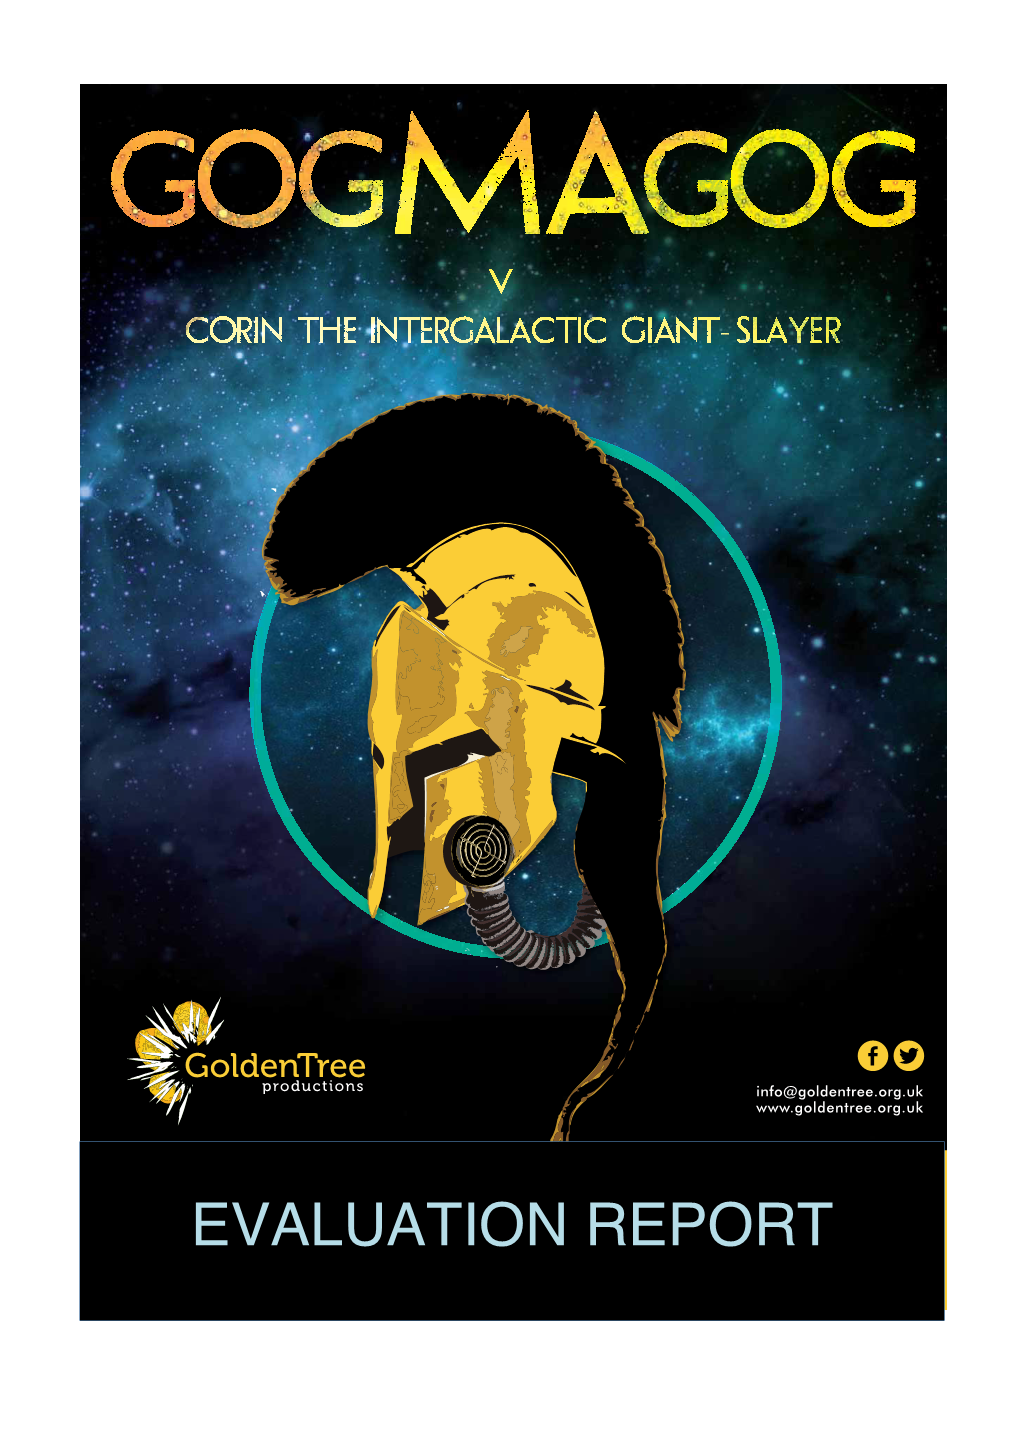 GOGMAGOG-2014-Evaluation-Report.Pdf